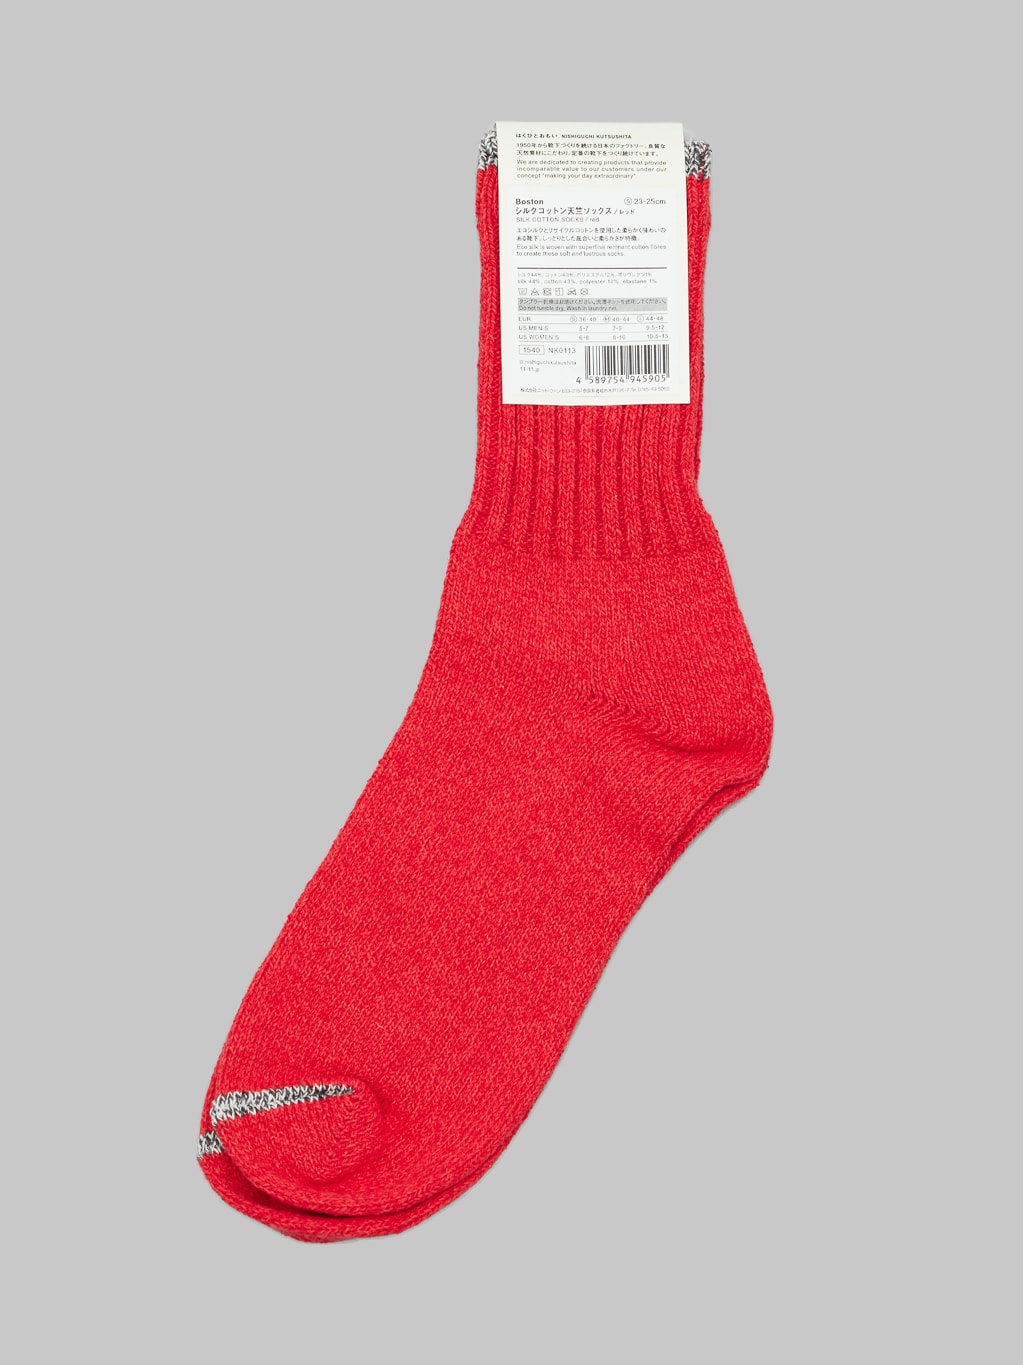 nishiguchi kutsushita silk cotton socks red back label